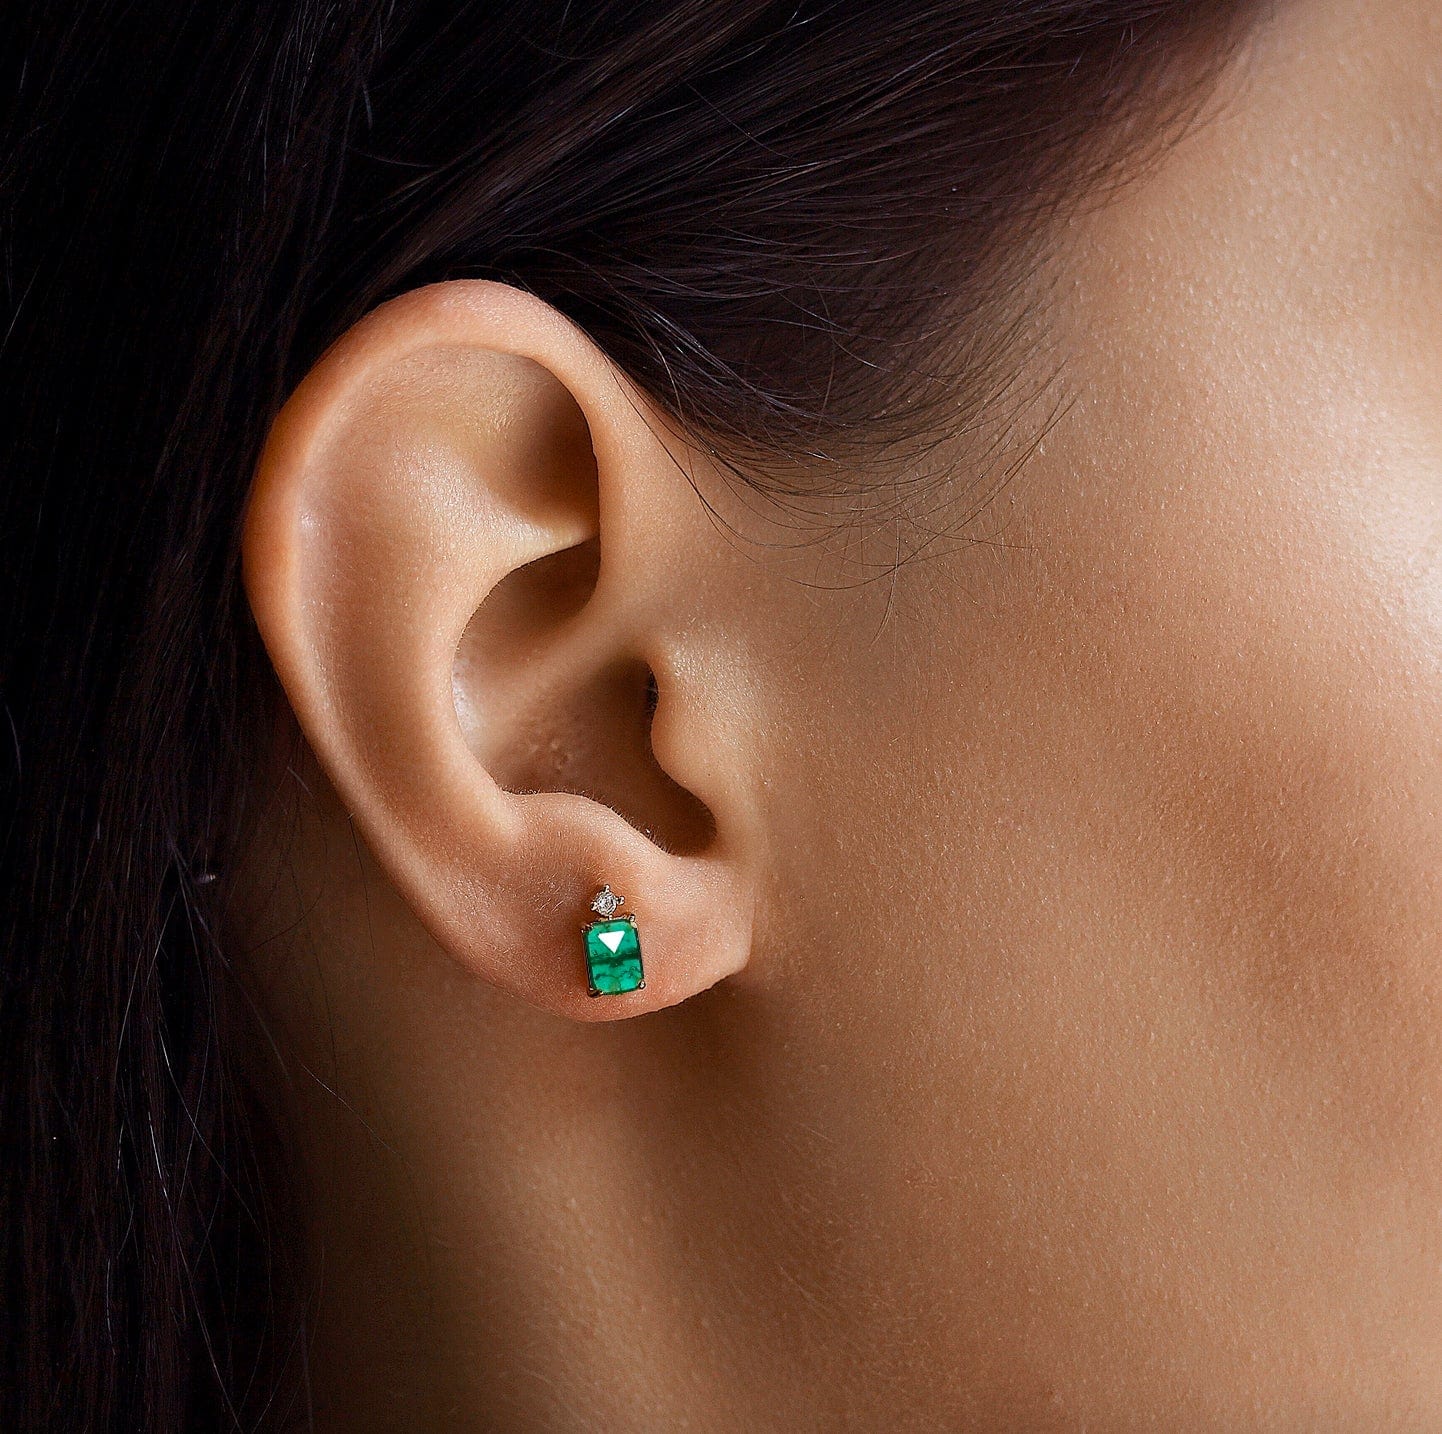 TAI JEWELRY earrings Emerald Stone Earrings With Cz Drop